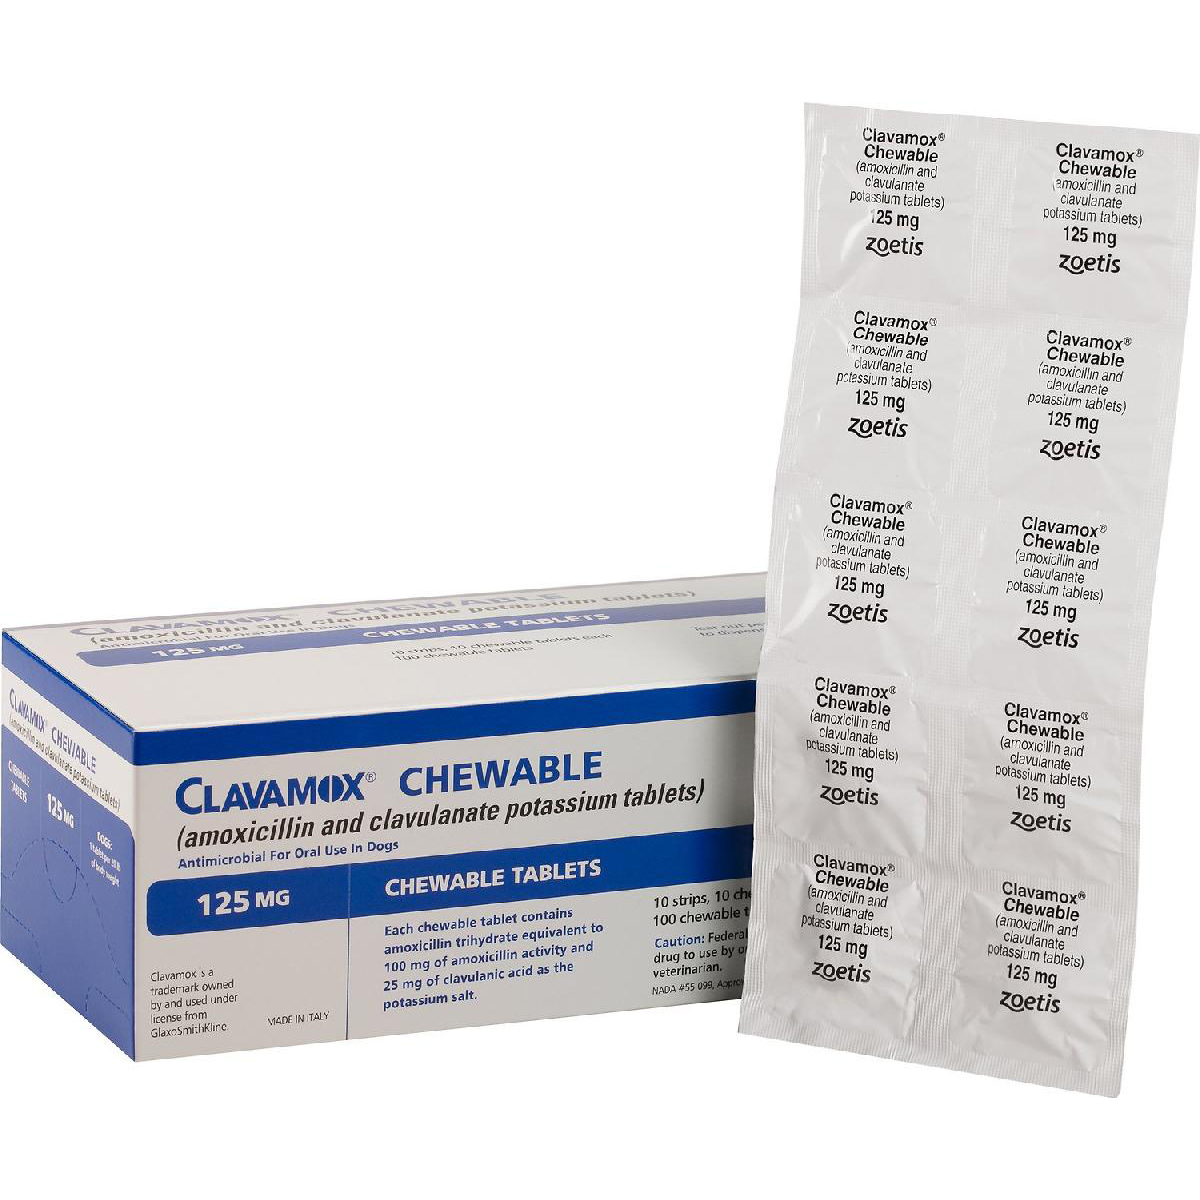 Clavamox (amoxicillin trihydrate/clavulanate potassium) Chewable